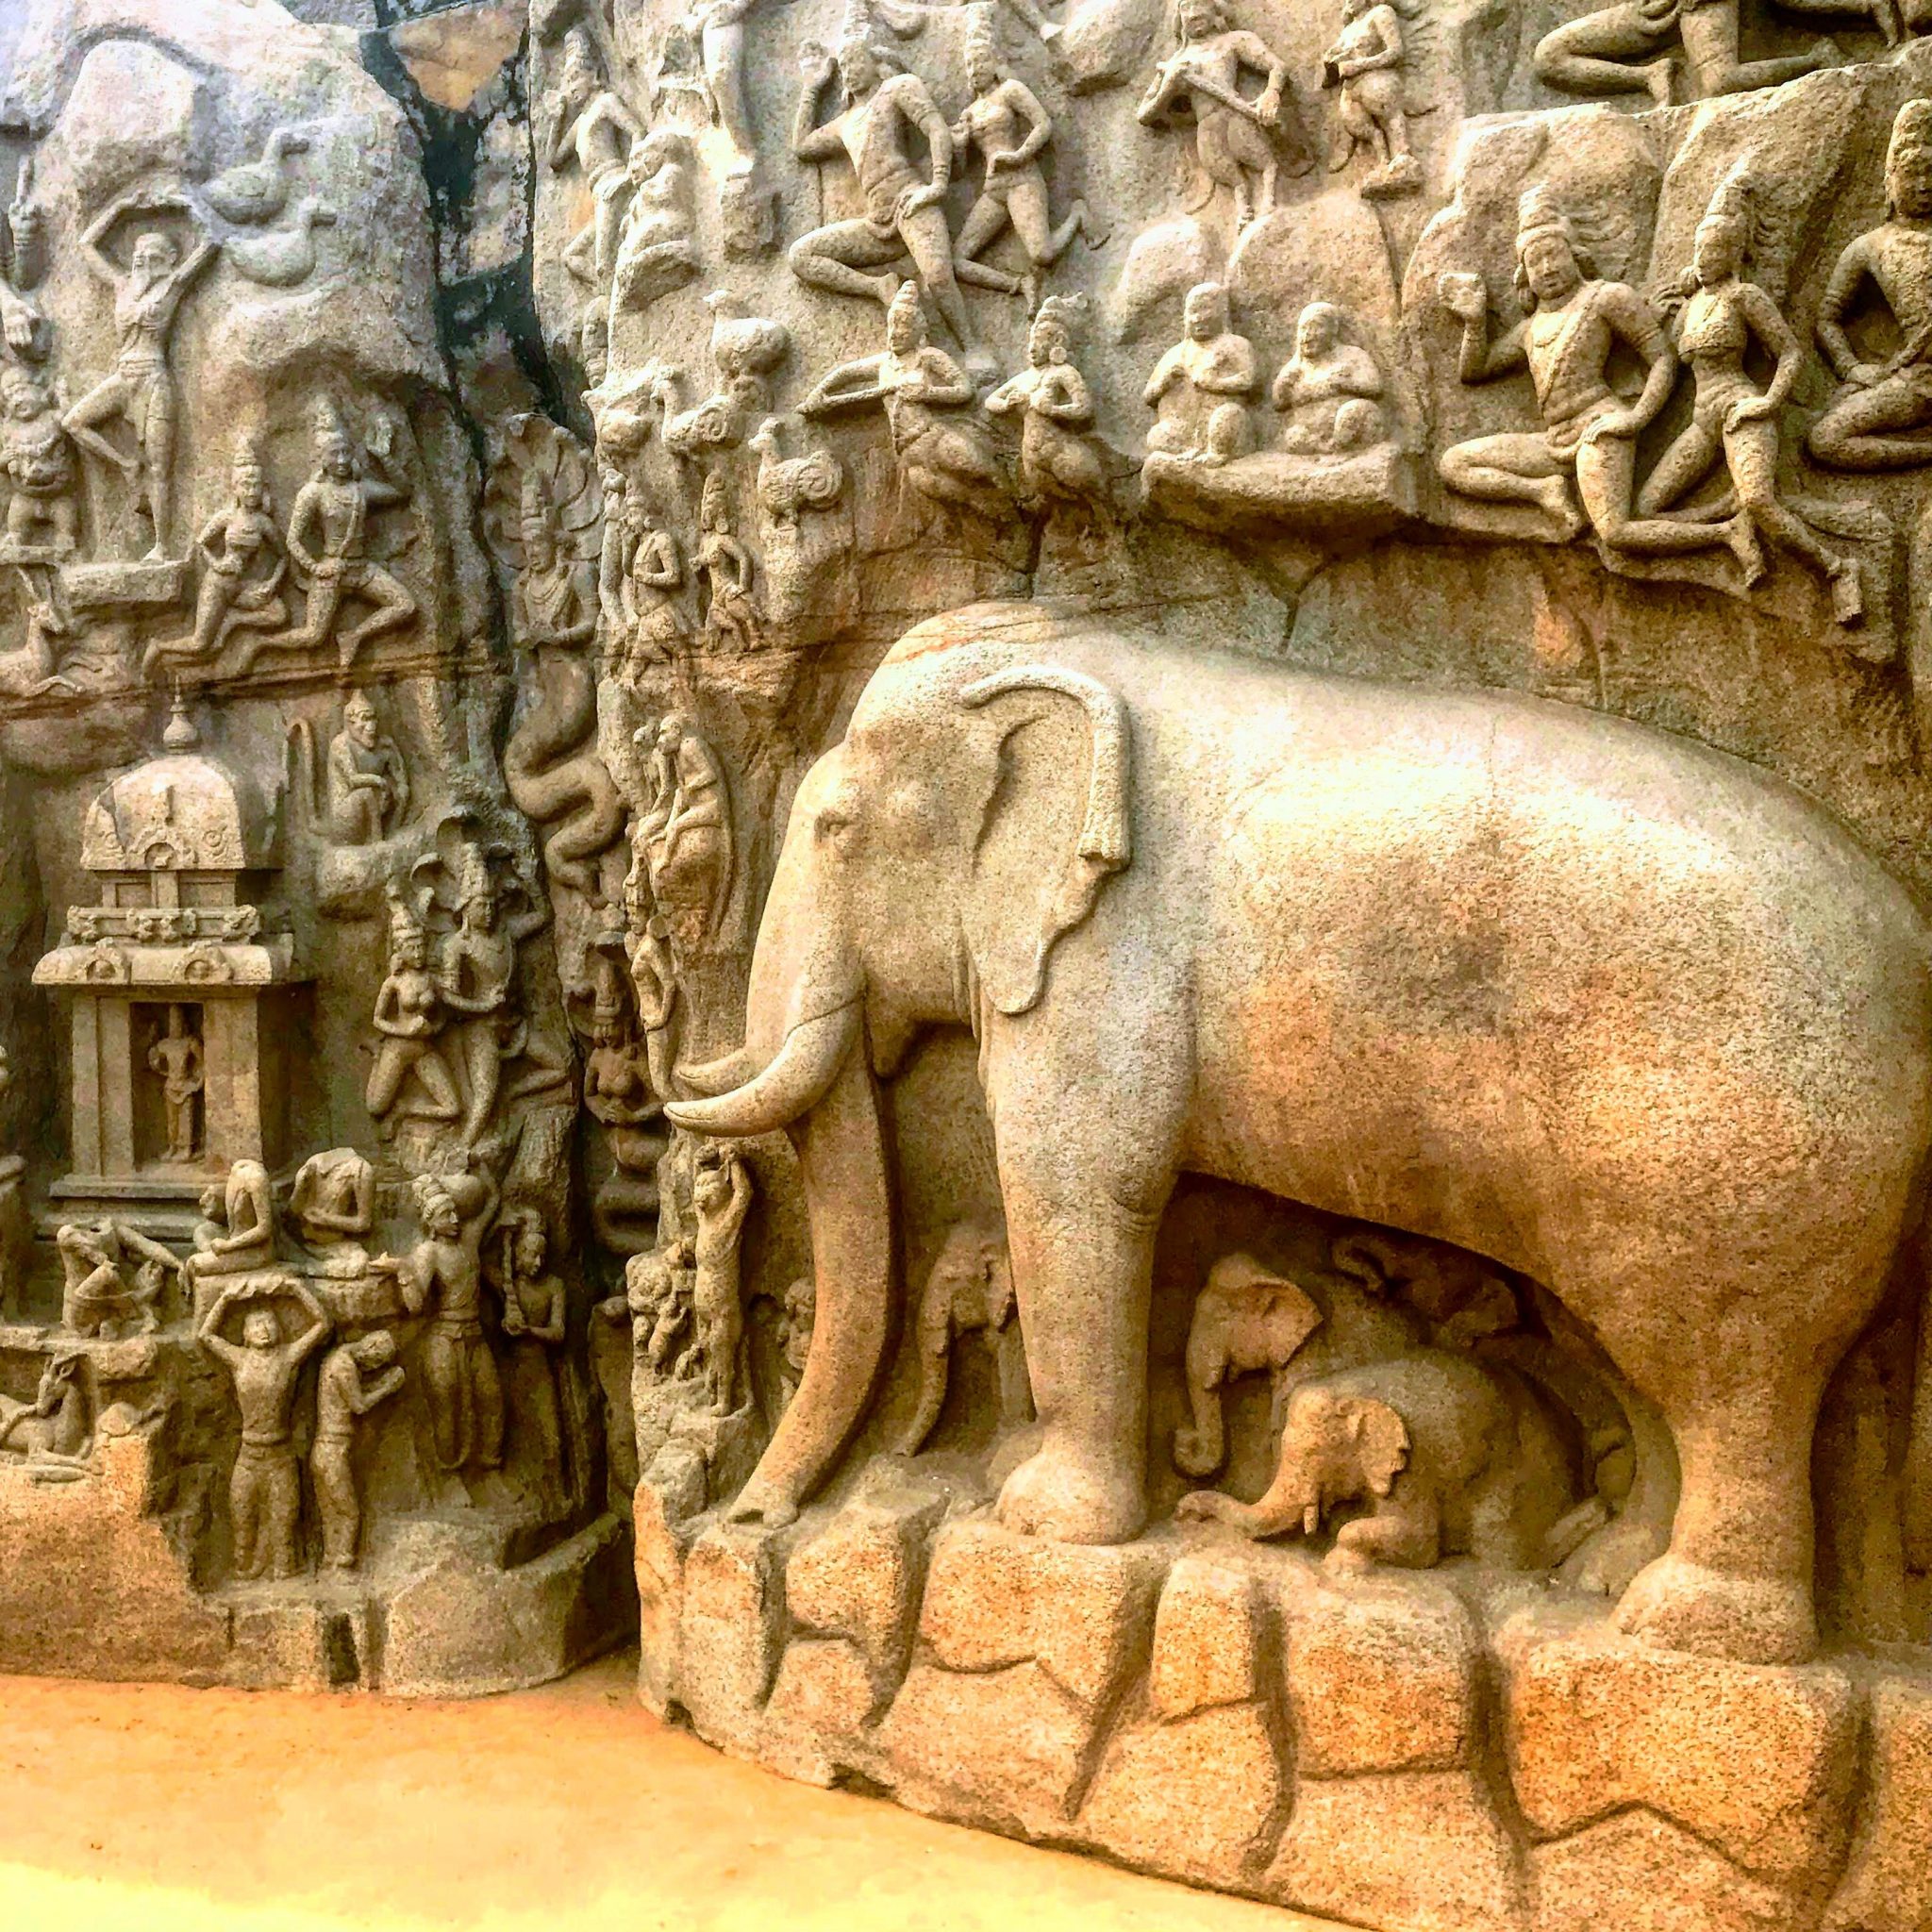 Arjuna's Penance/Descent of the Ganges, Mahabalipuram, South India